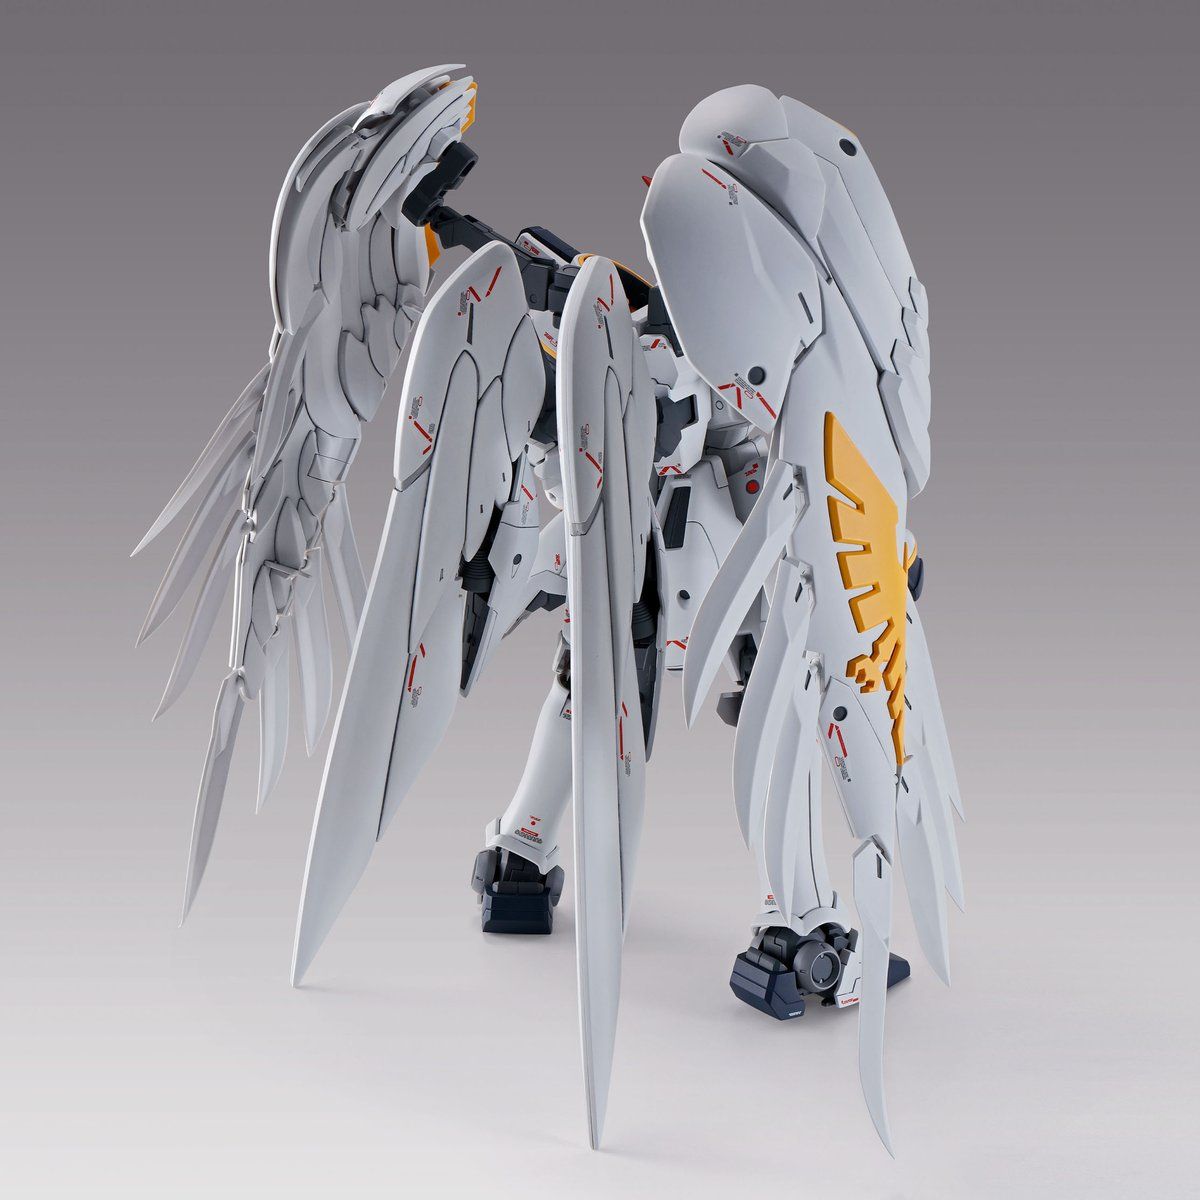 Gundam 1/100 MG Gundam Wing OZ-00MS Tallgeese Flugel EW Model Kit Exclusive